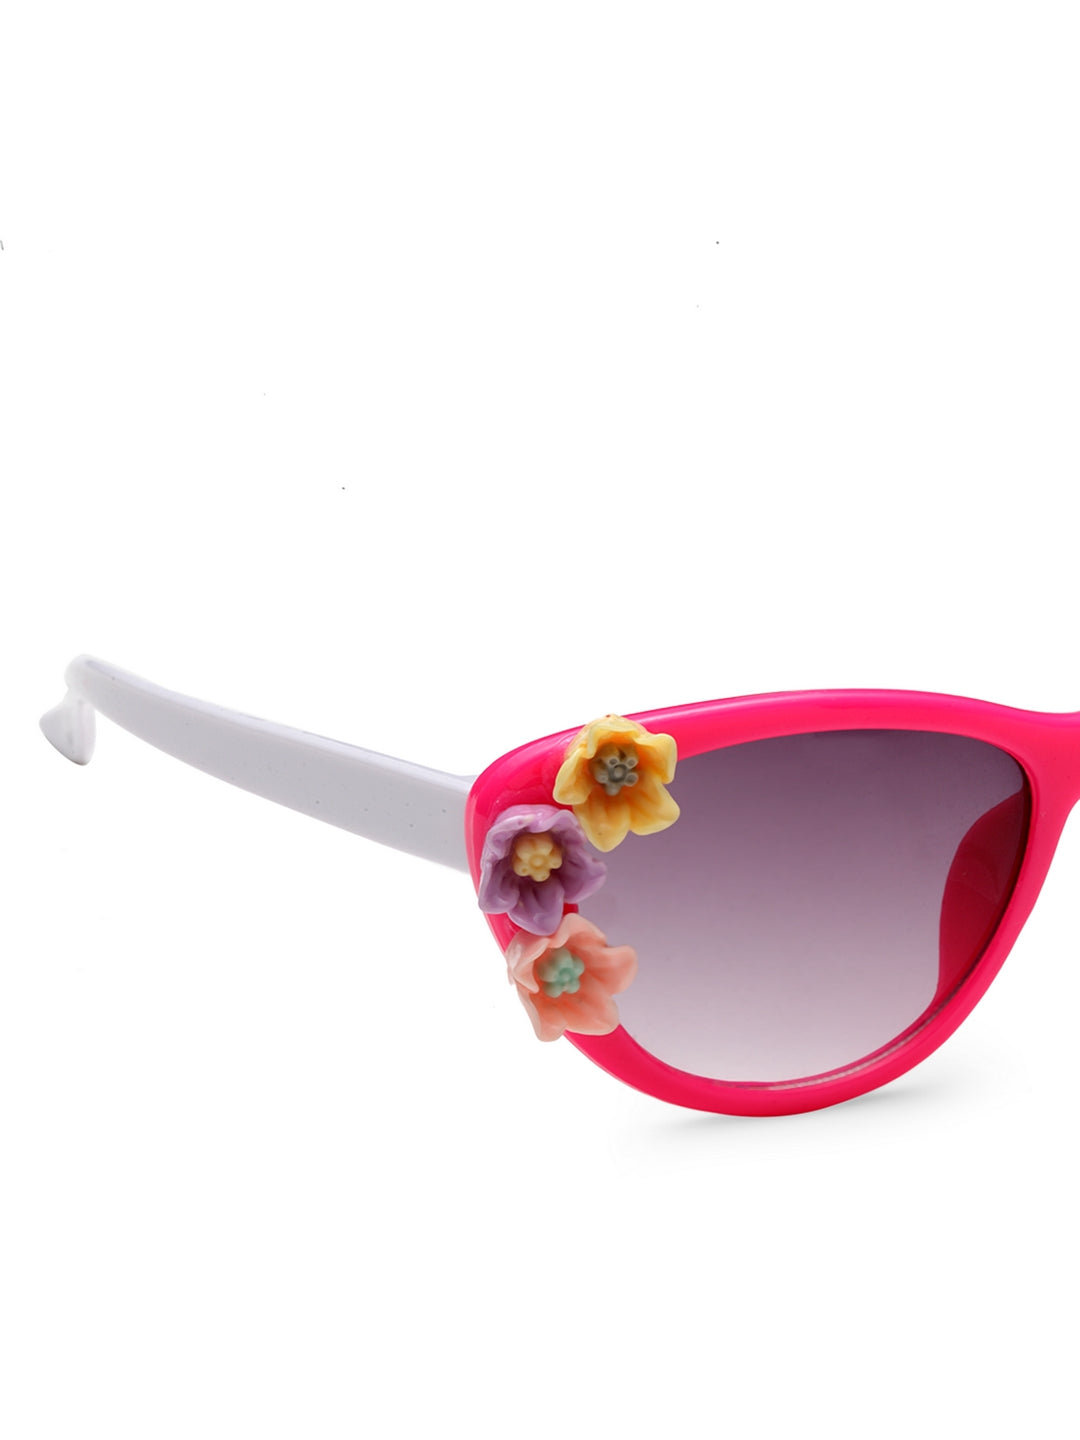 Stol'n Polarized UV-Protected Cat Eye Kids Sunglasses- Pink